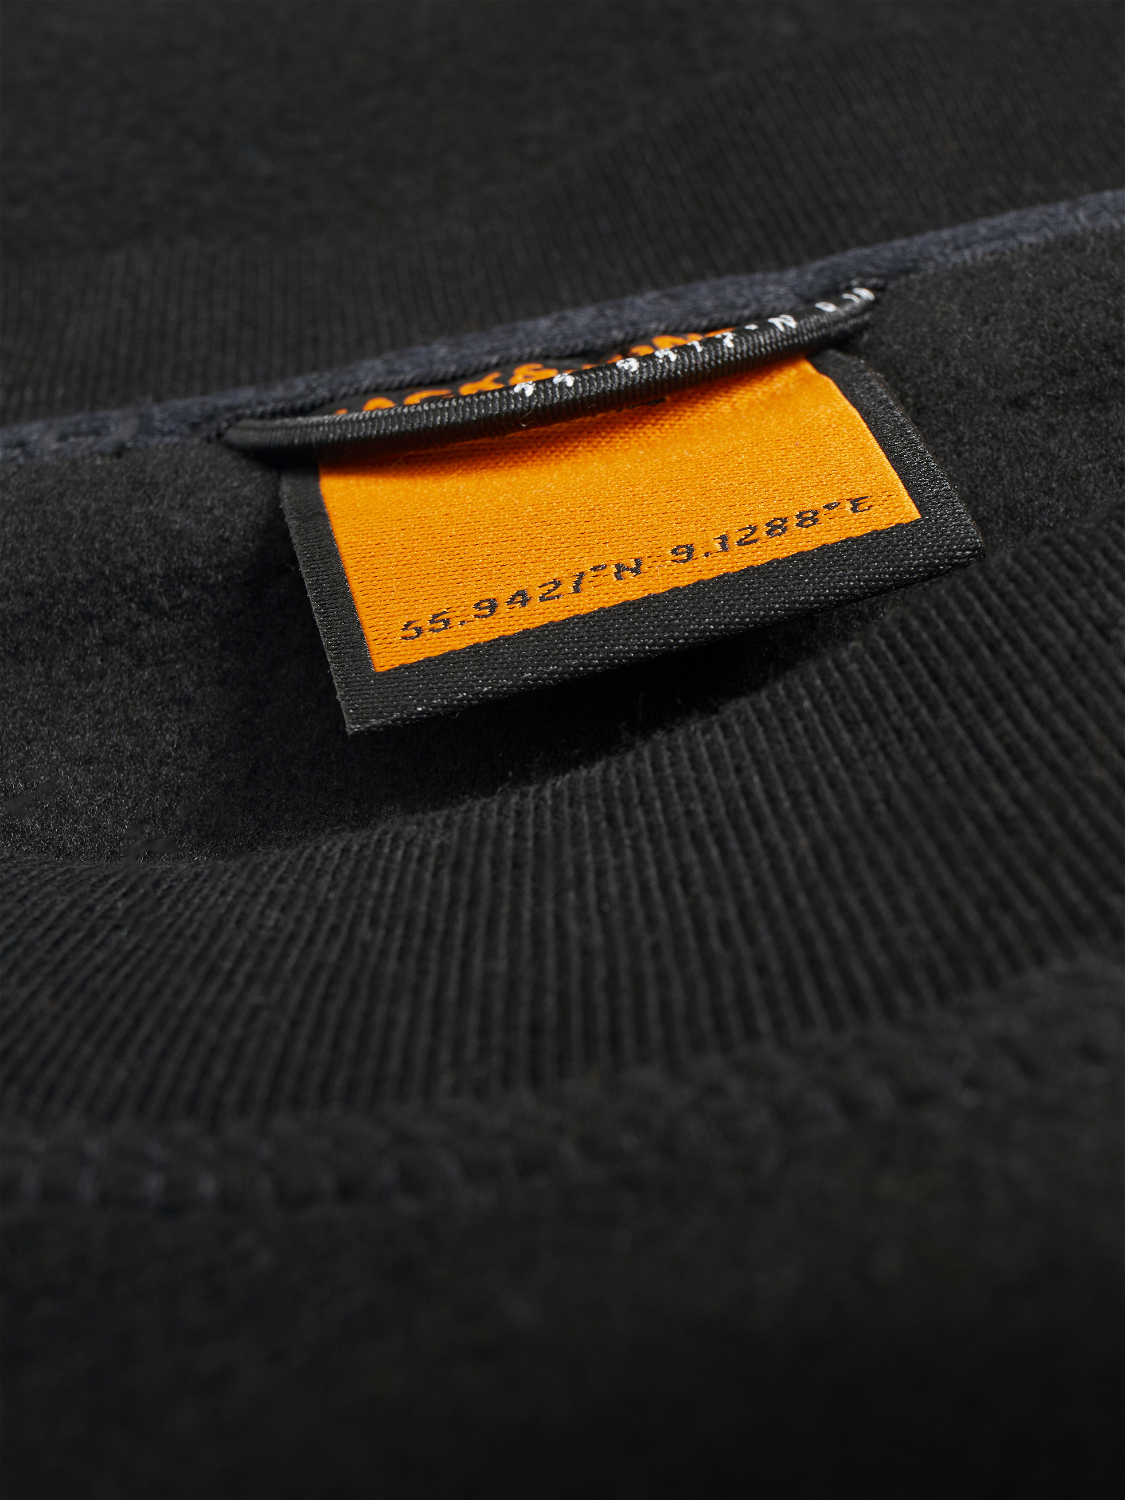 Jack & Jones Plain Crewn Neck Sweatshirt -Black - 12241523